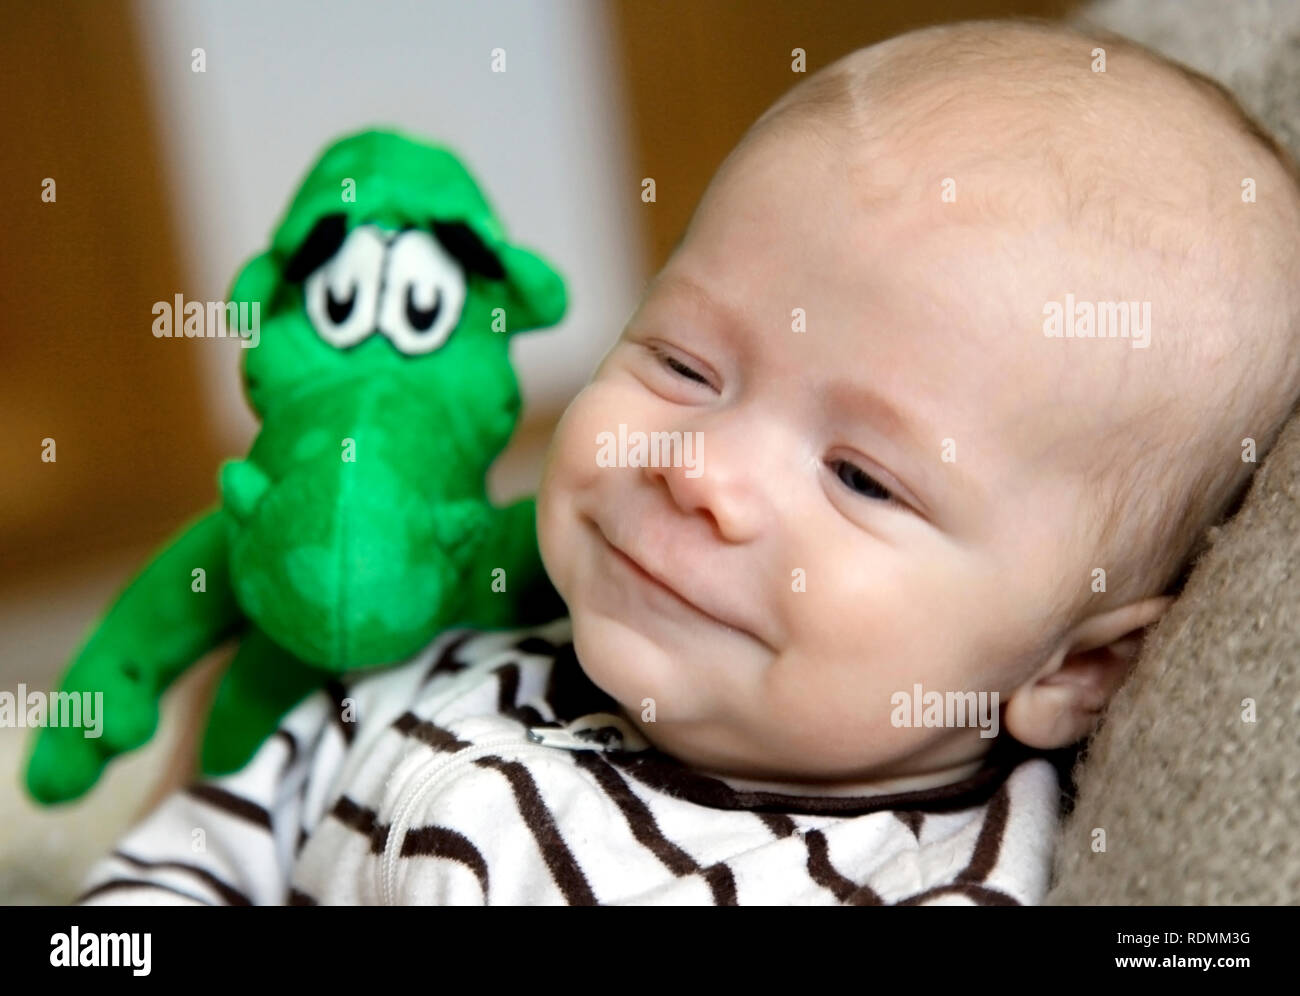 baby with stuffed animal Stock Photo